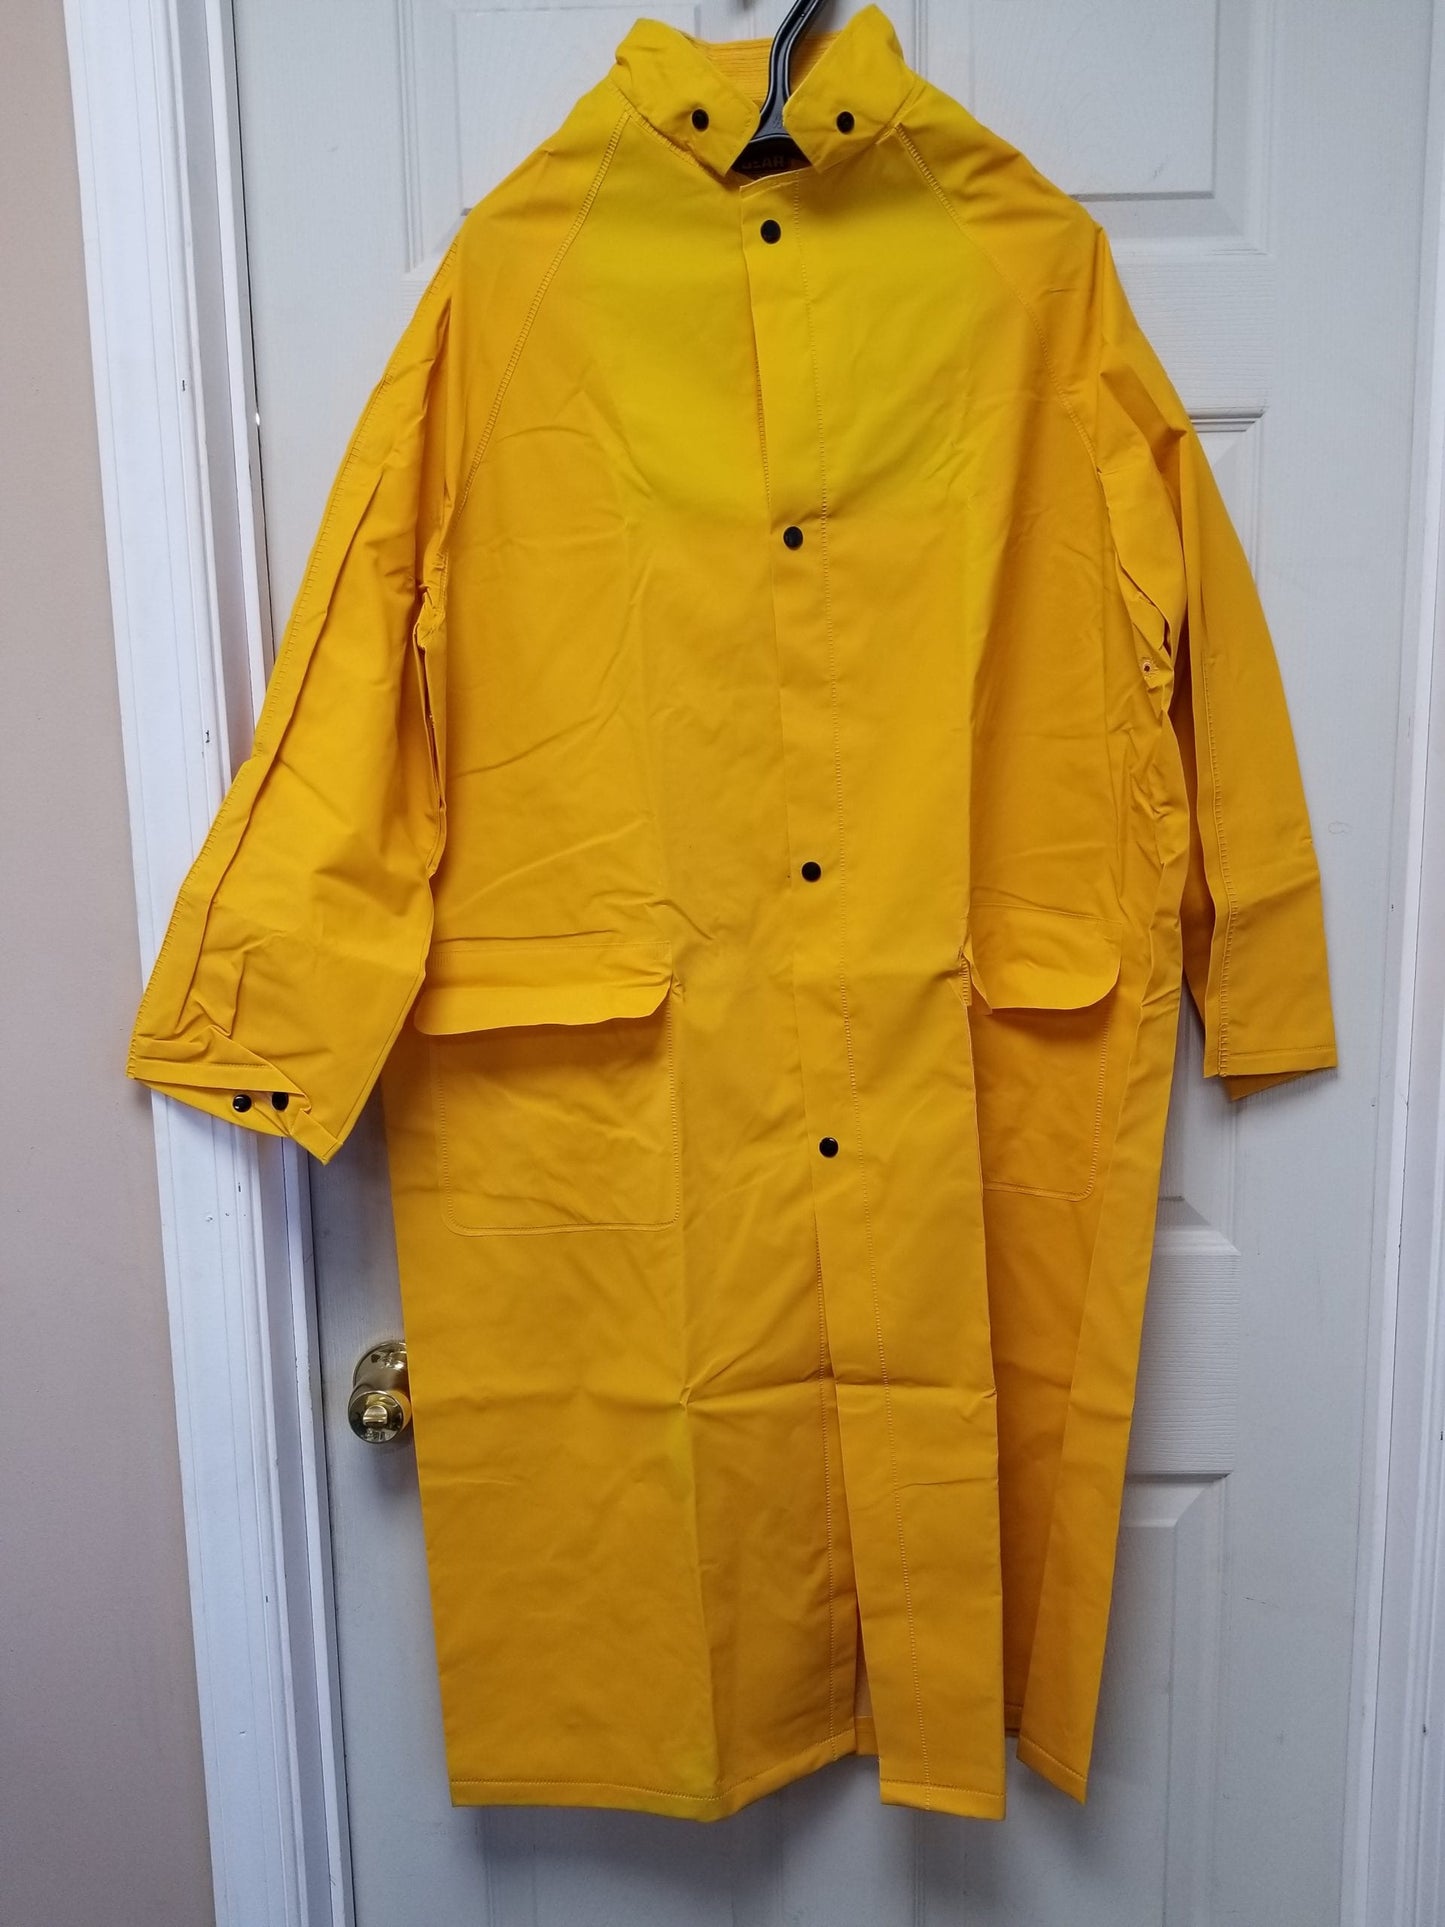 Westchester .35mm Industrial Raincoat size M